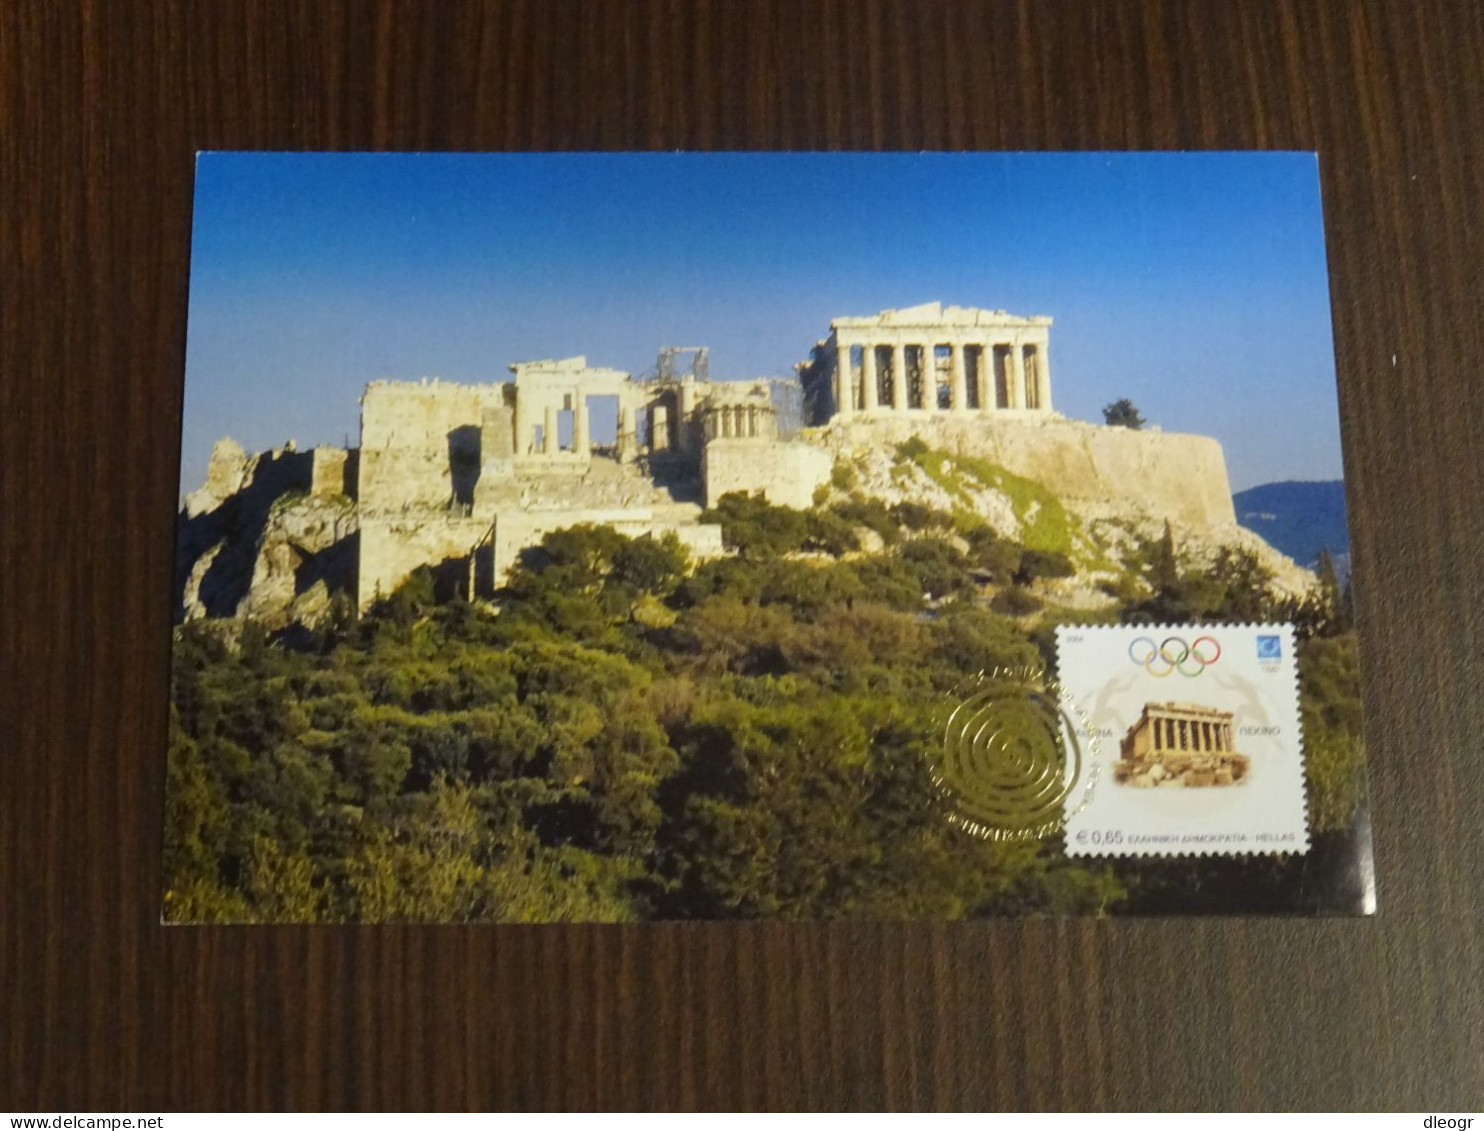 Greece 2004 Athens 2004 Beijing Maximum Card VF - Cartes-maximum (CM)